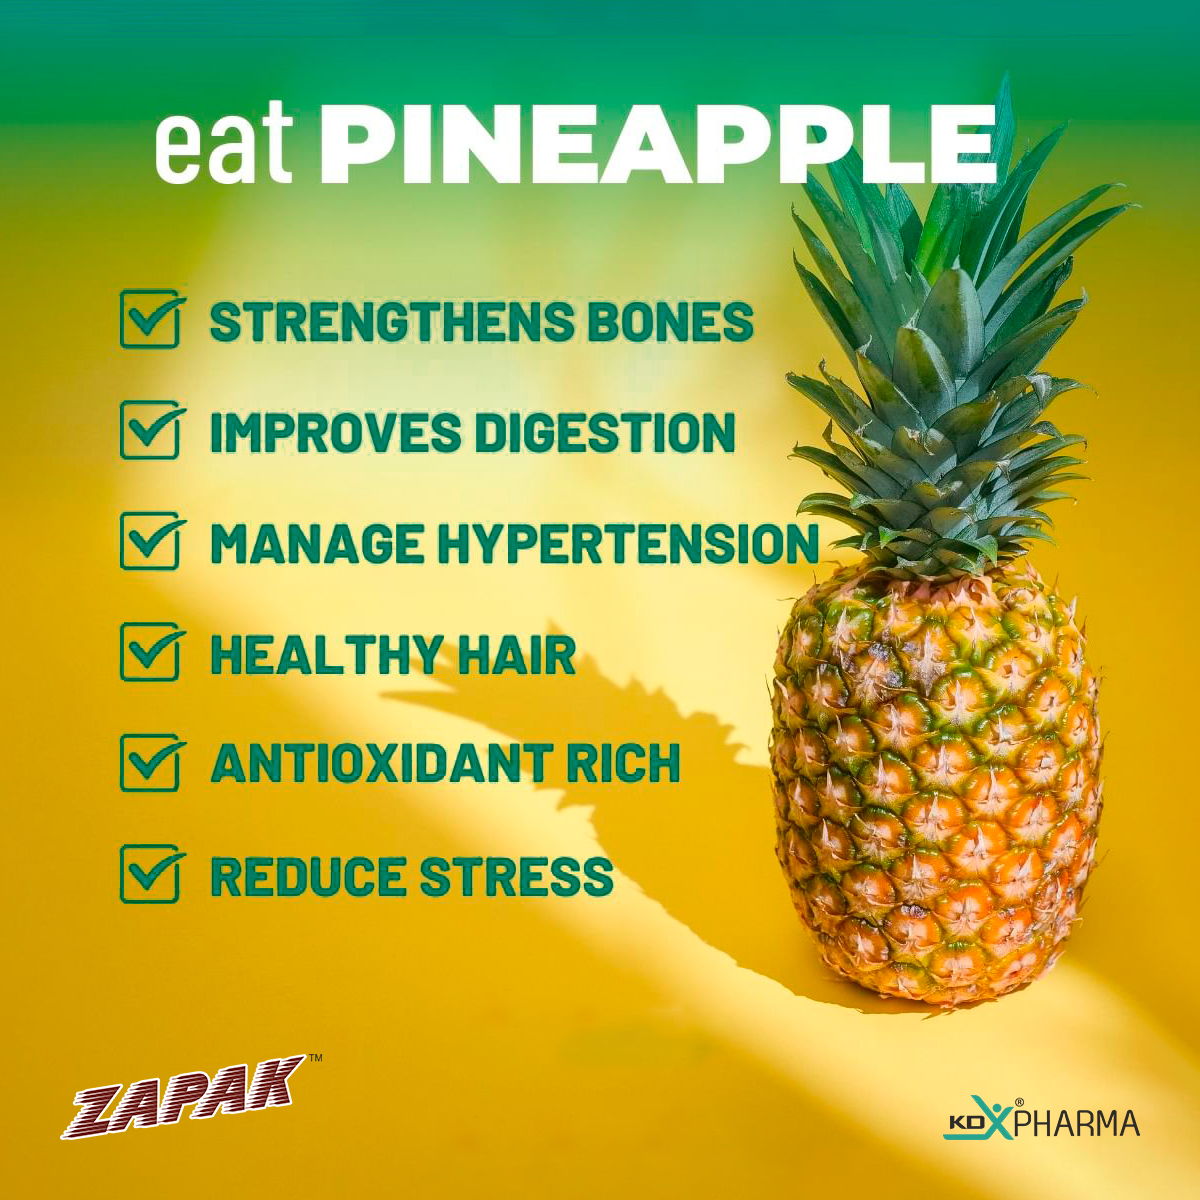 Eat that pineapple!
.
.
.
.
.
.
.
.
#pineapple #pineapples #bonestrength #dugestion #hypertension #hair #antiocidant #stress #stressless #stressfree #Ayurveda #VocalForLocal #IndianMedicine #constipationsolution #constipationface #constipationhappens #zapaksesaaf #zapakchurna